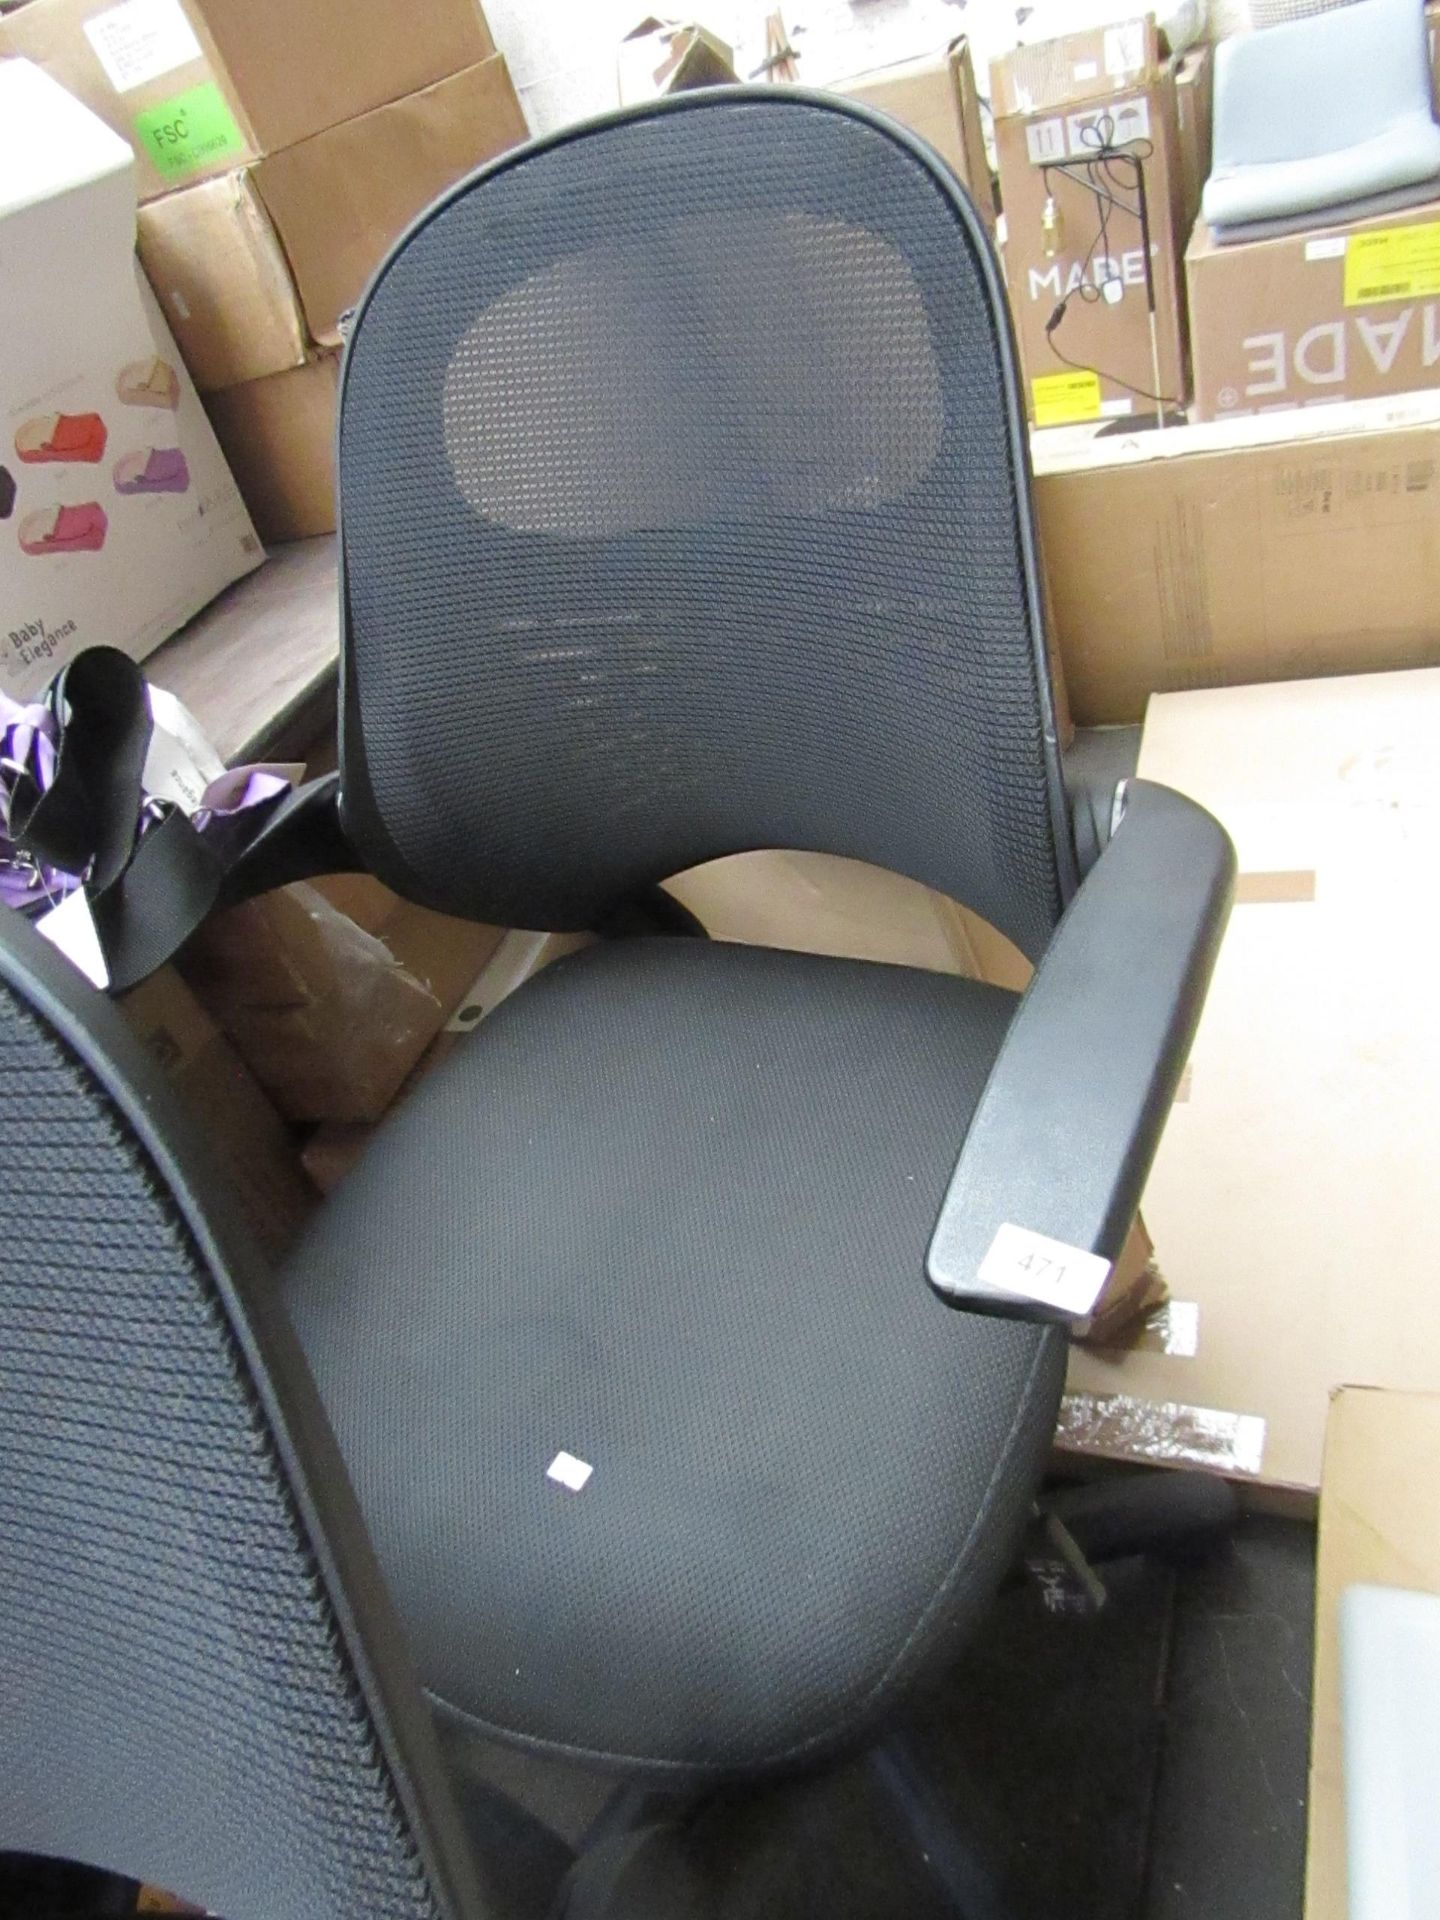 Bayside mesh office chair, no major damage.